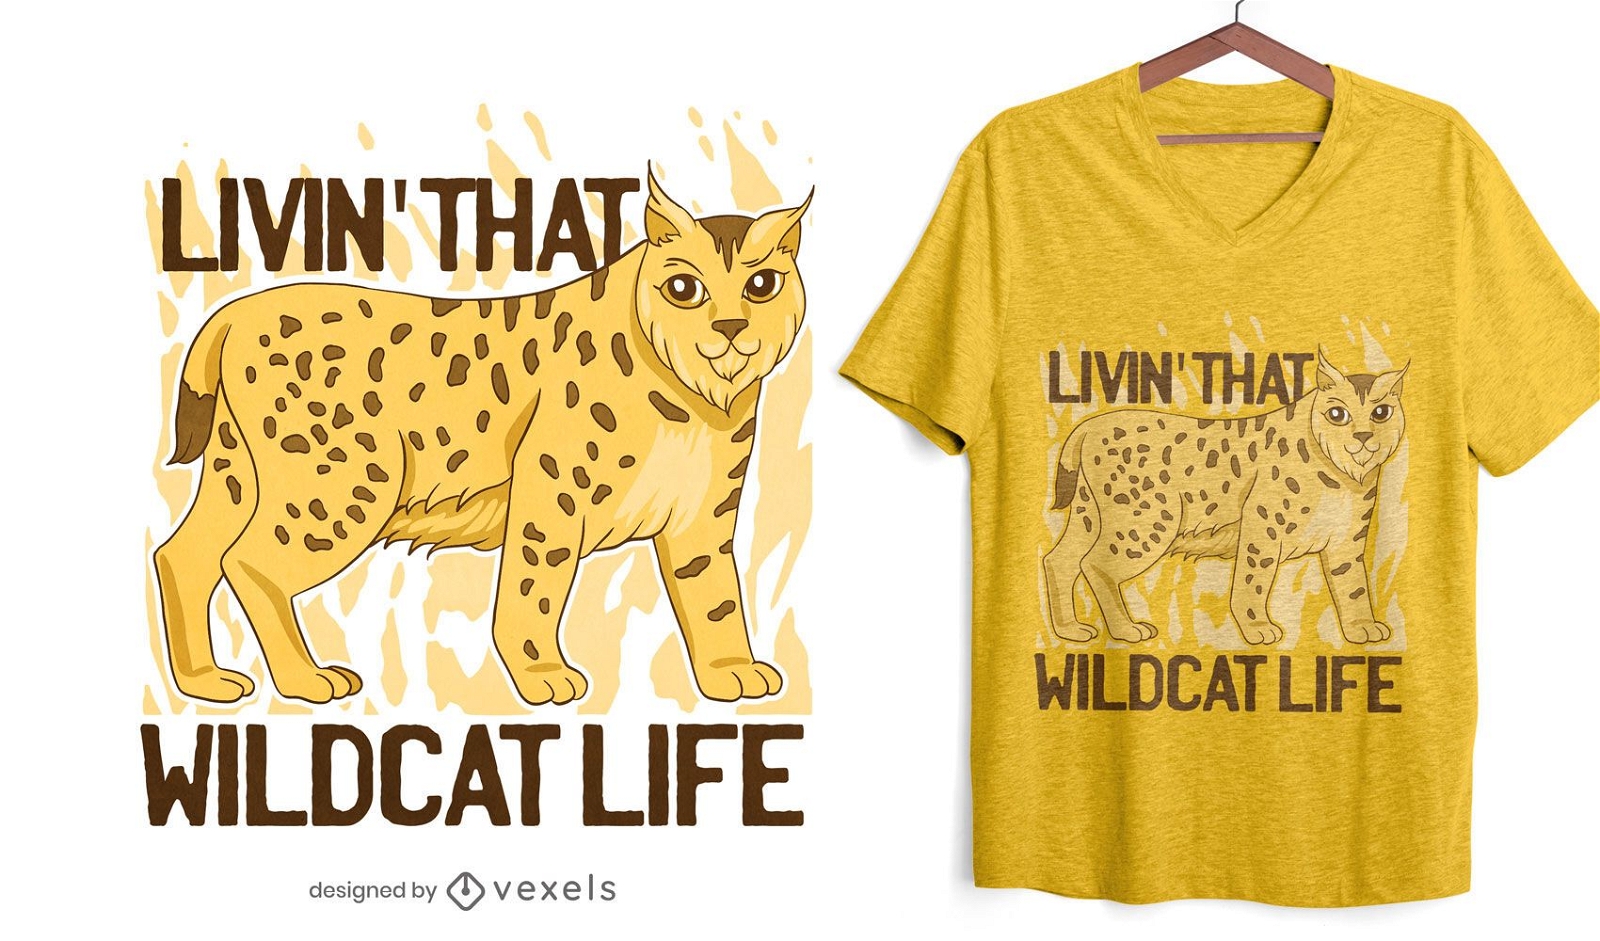 Wildcat life t-shirt design